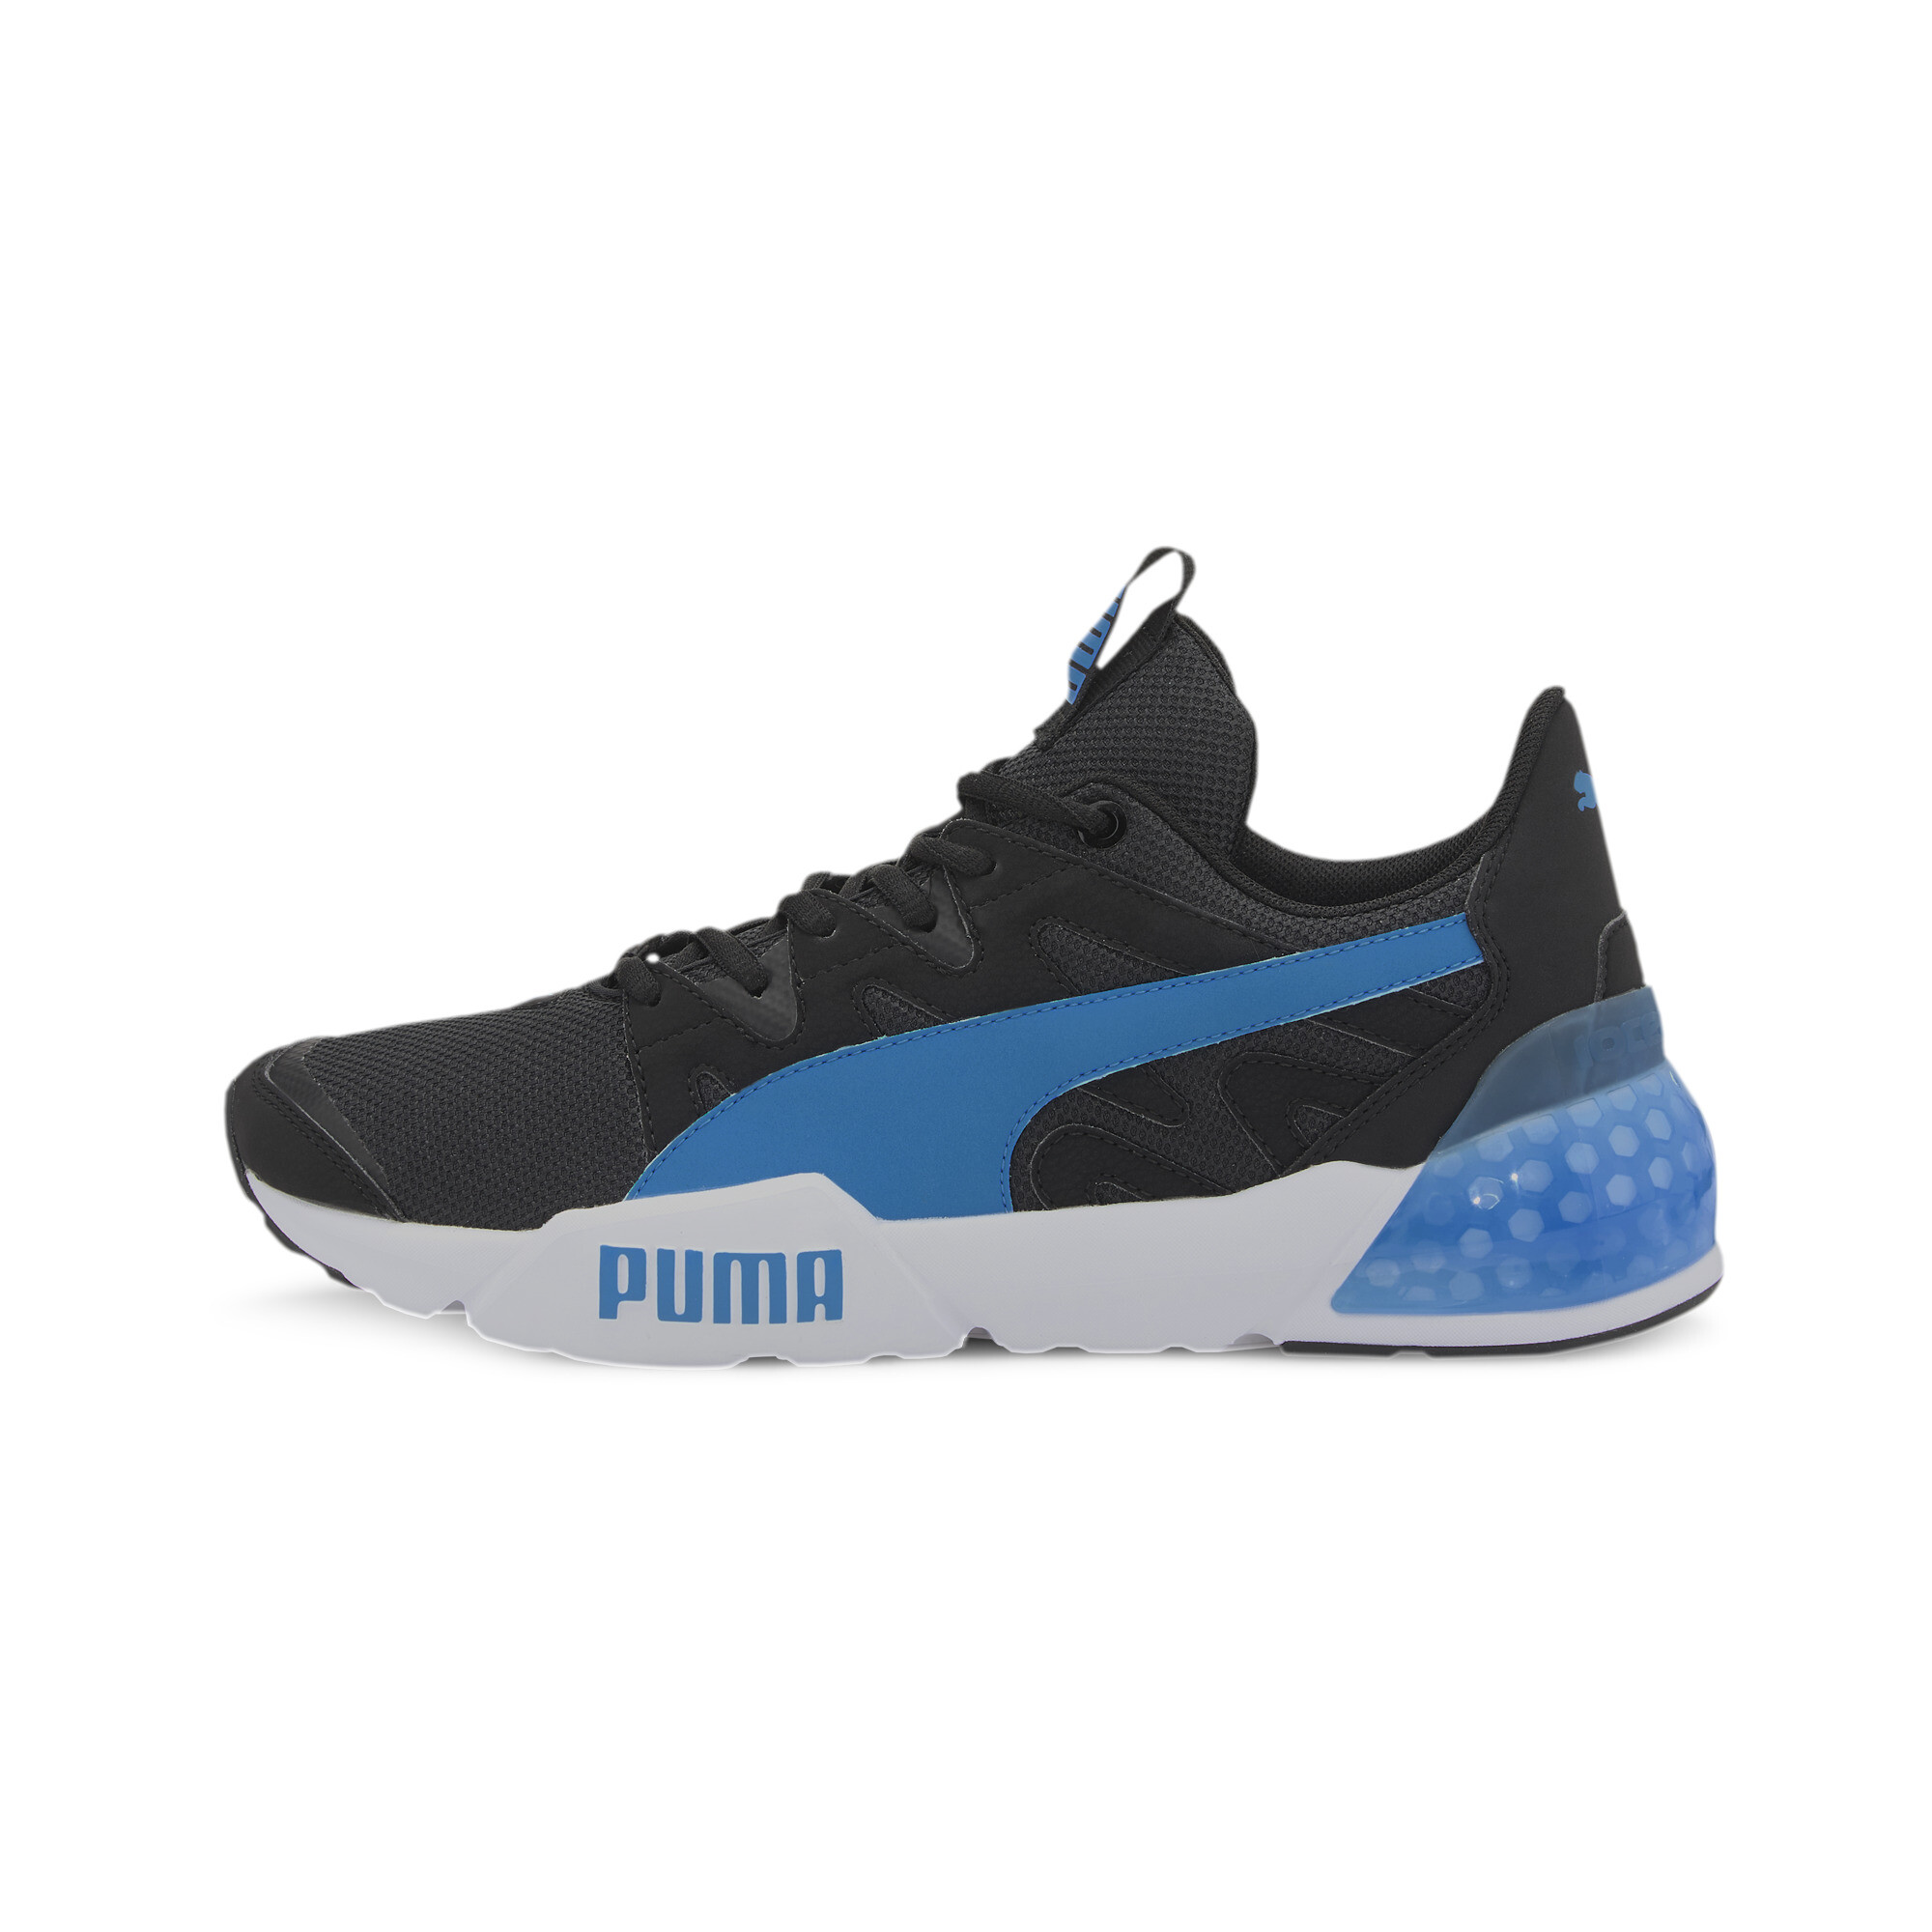 PUMA Men's CELL Pharos Neon Training Shoes | eBay